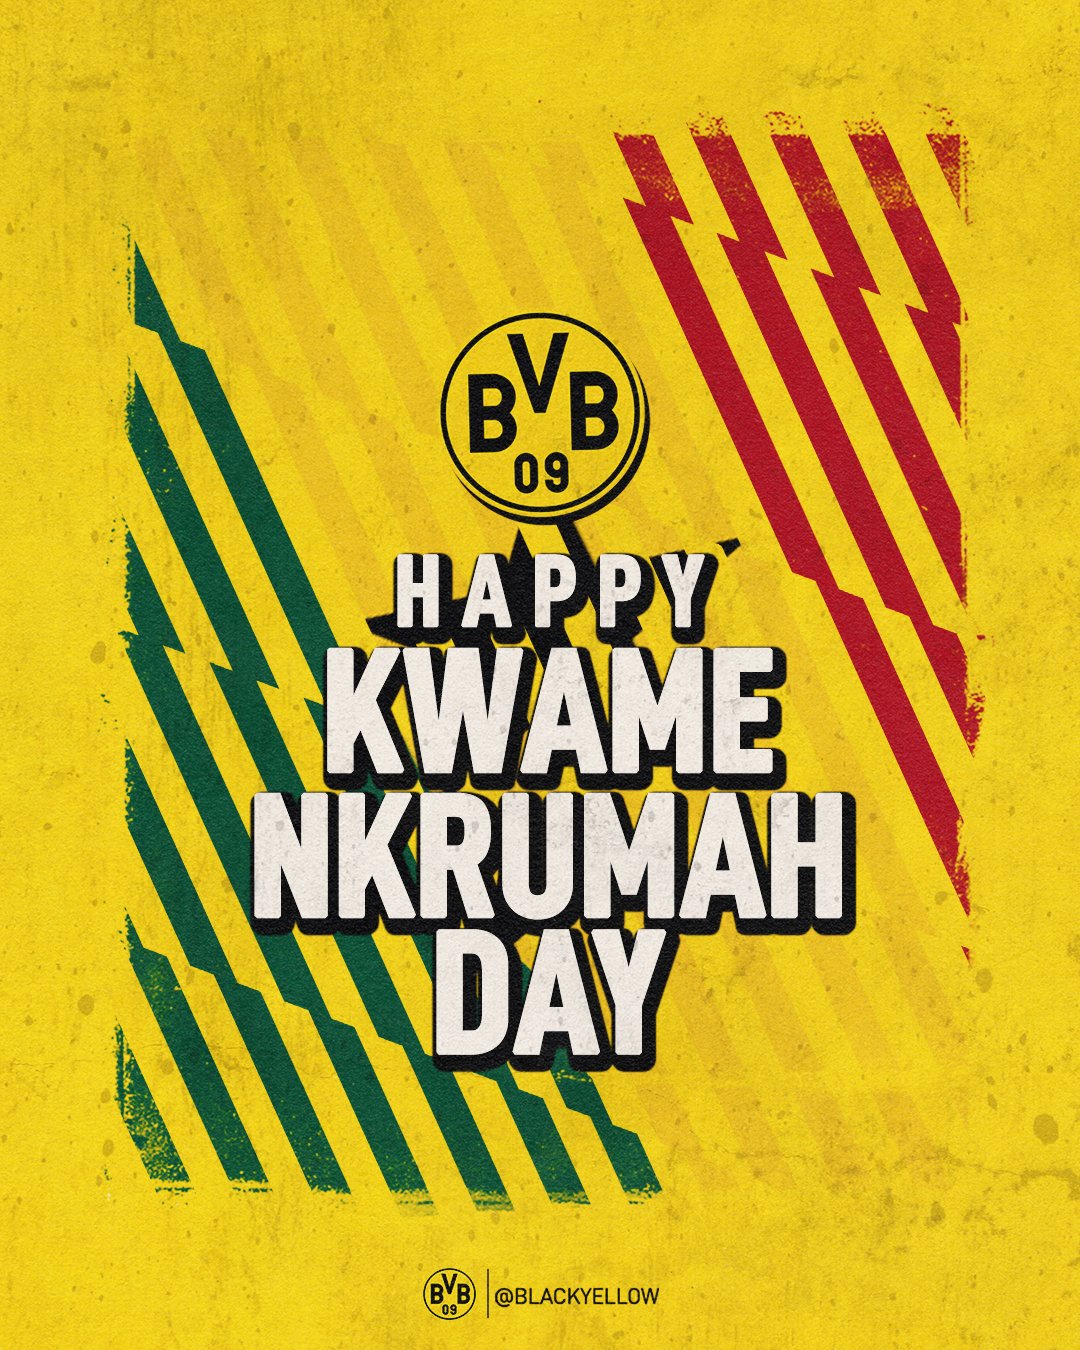 German giants Borussia Dortmund joins Ghana to celebrate Kwame Nkrumah Memorial Day